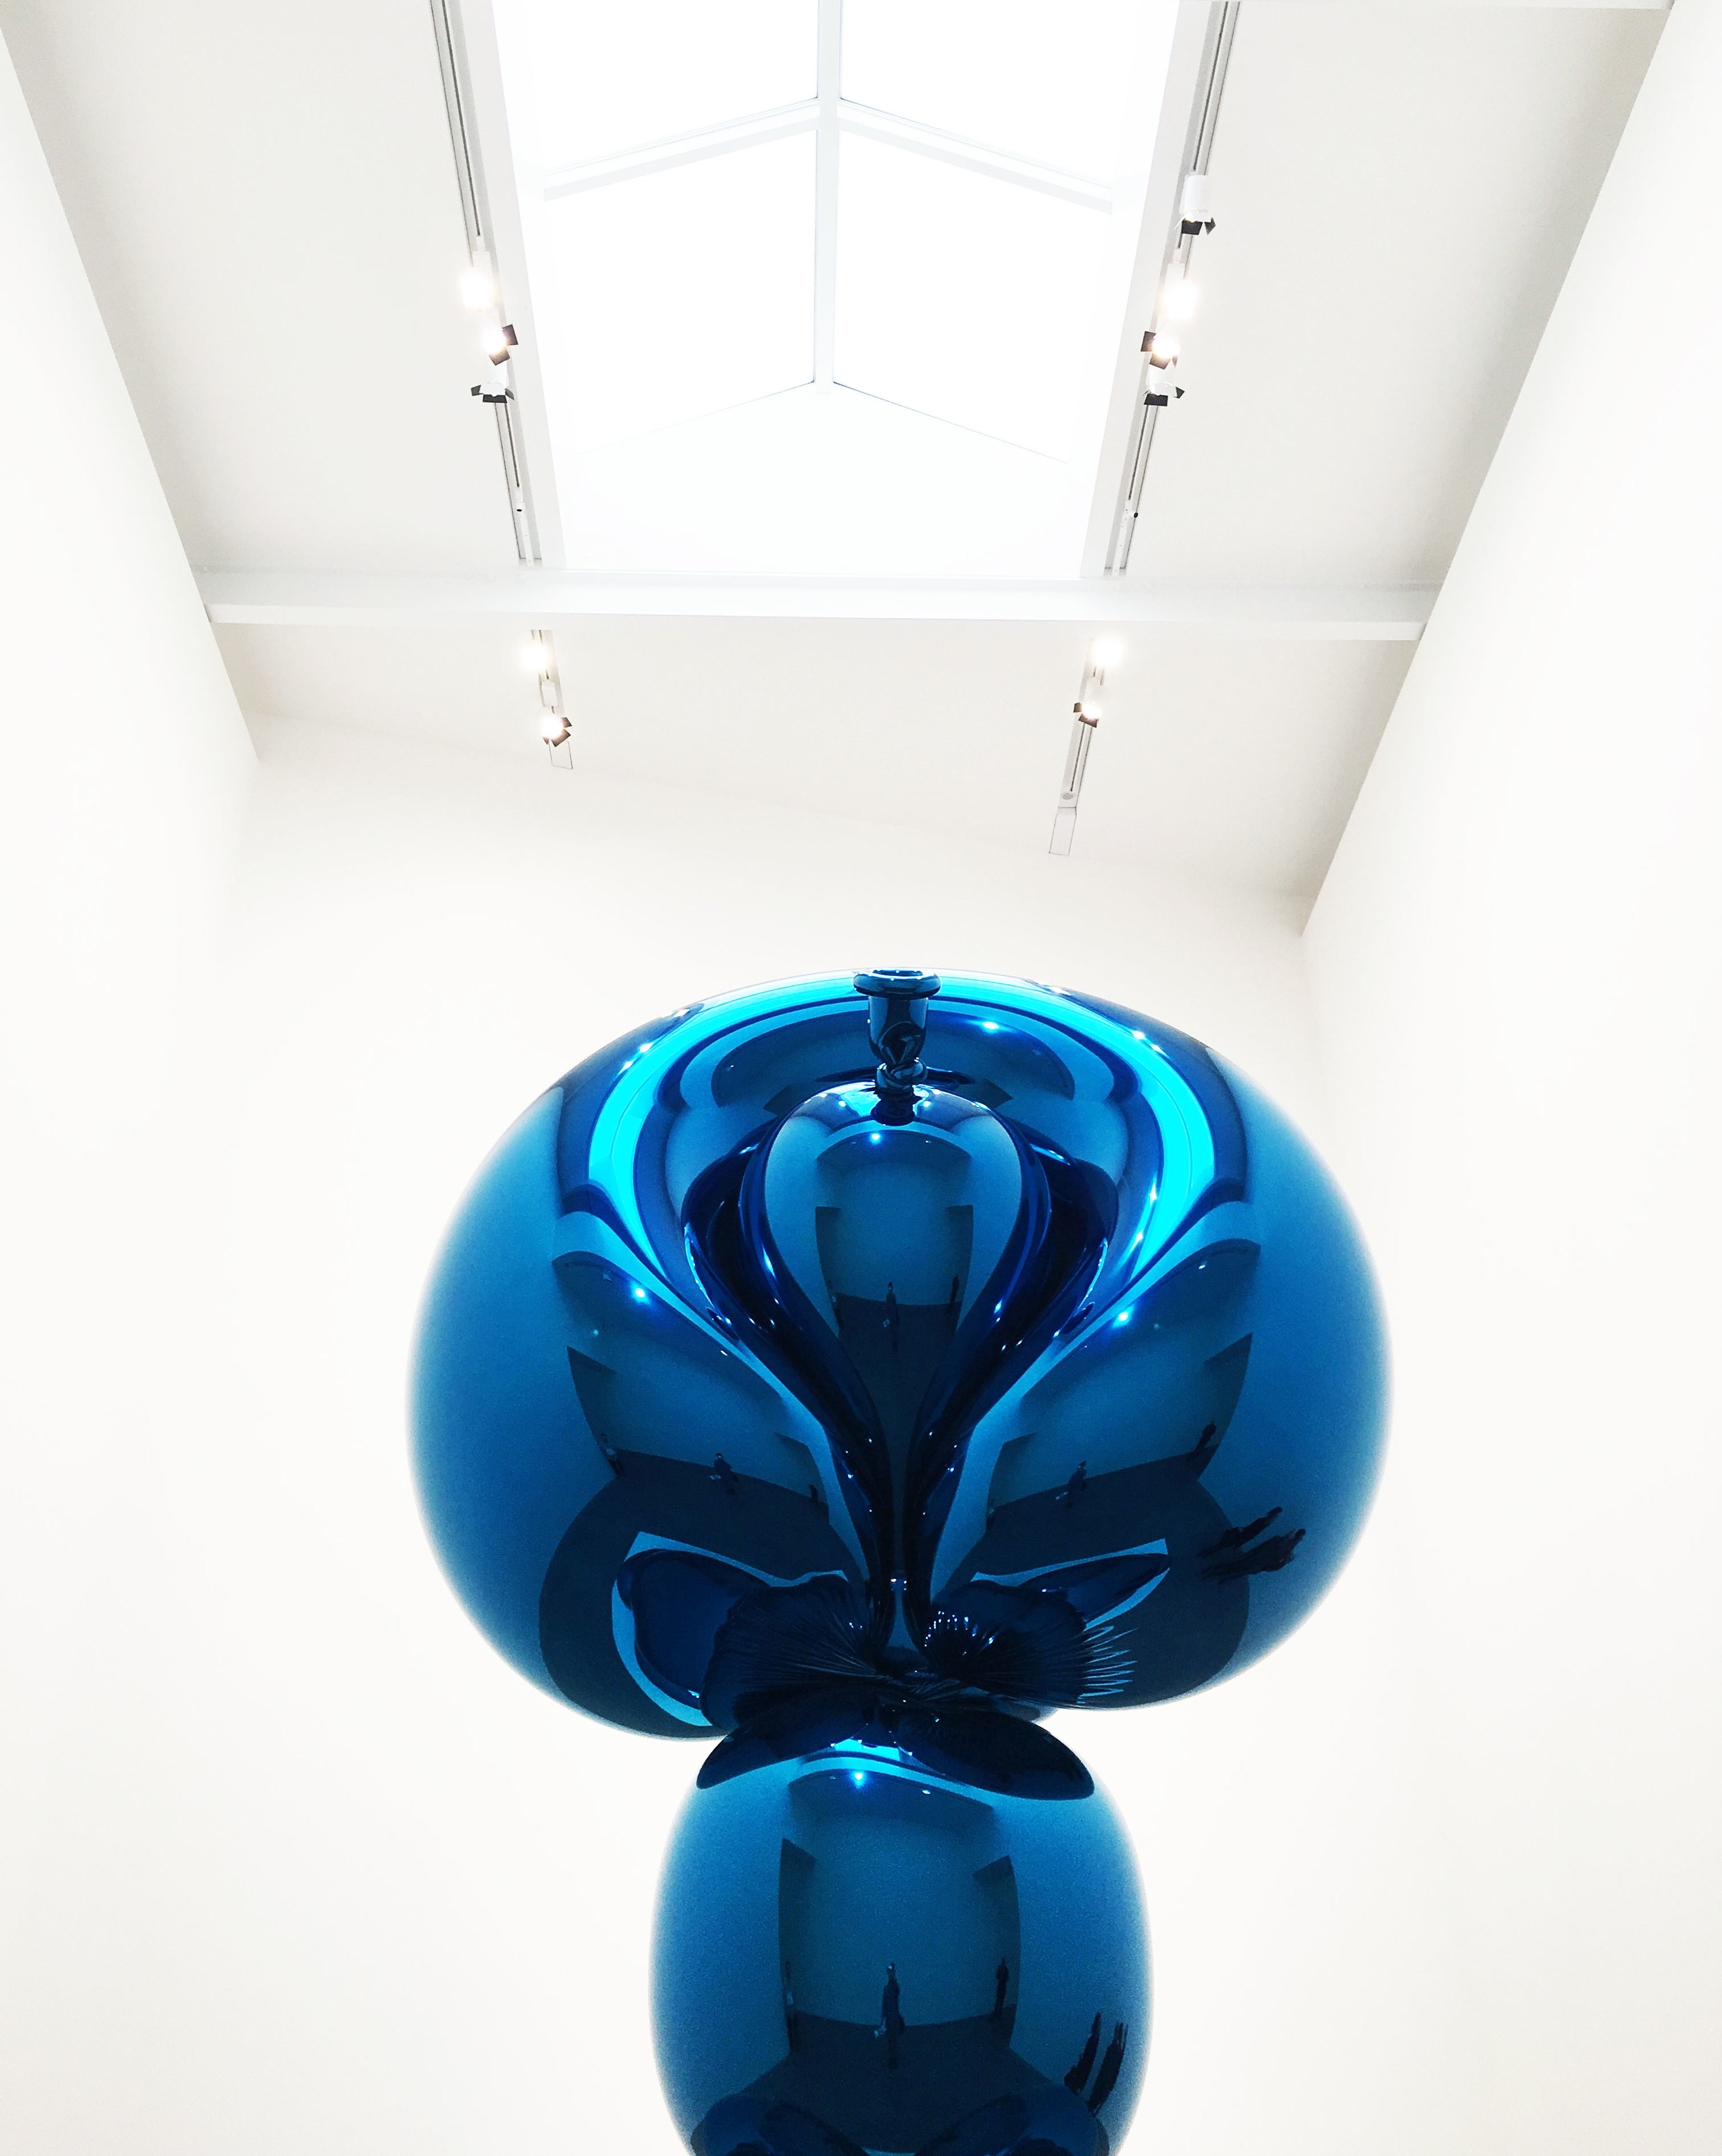 Jeff-Koons_Balloon_Damien-Hirst_Newport-street-gallery_AnnaVP.jpg